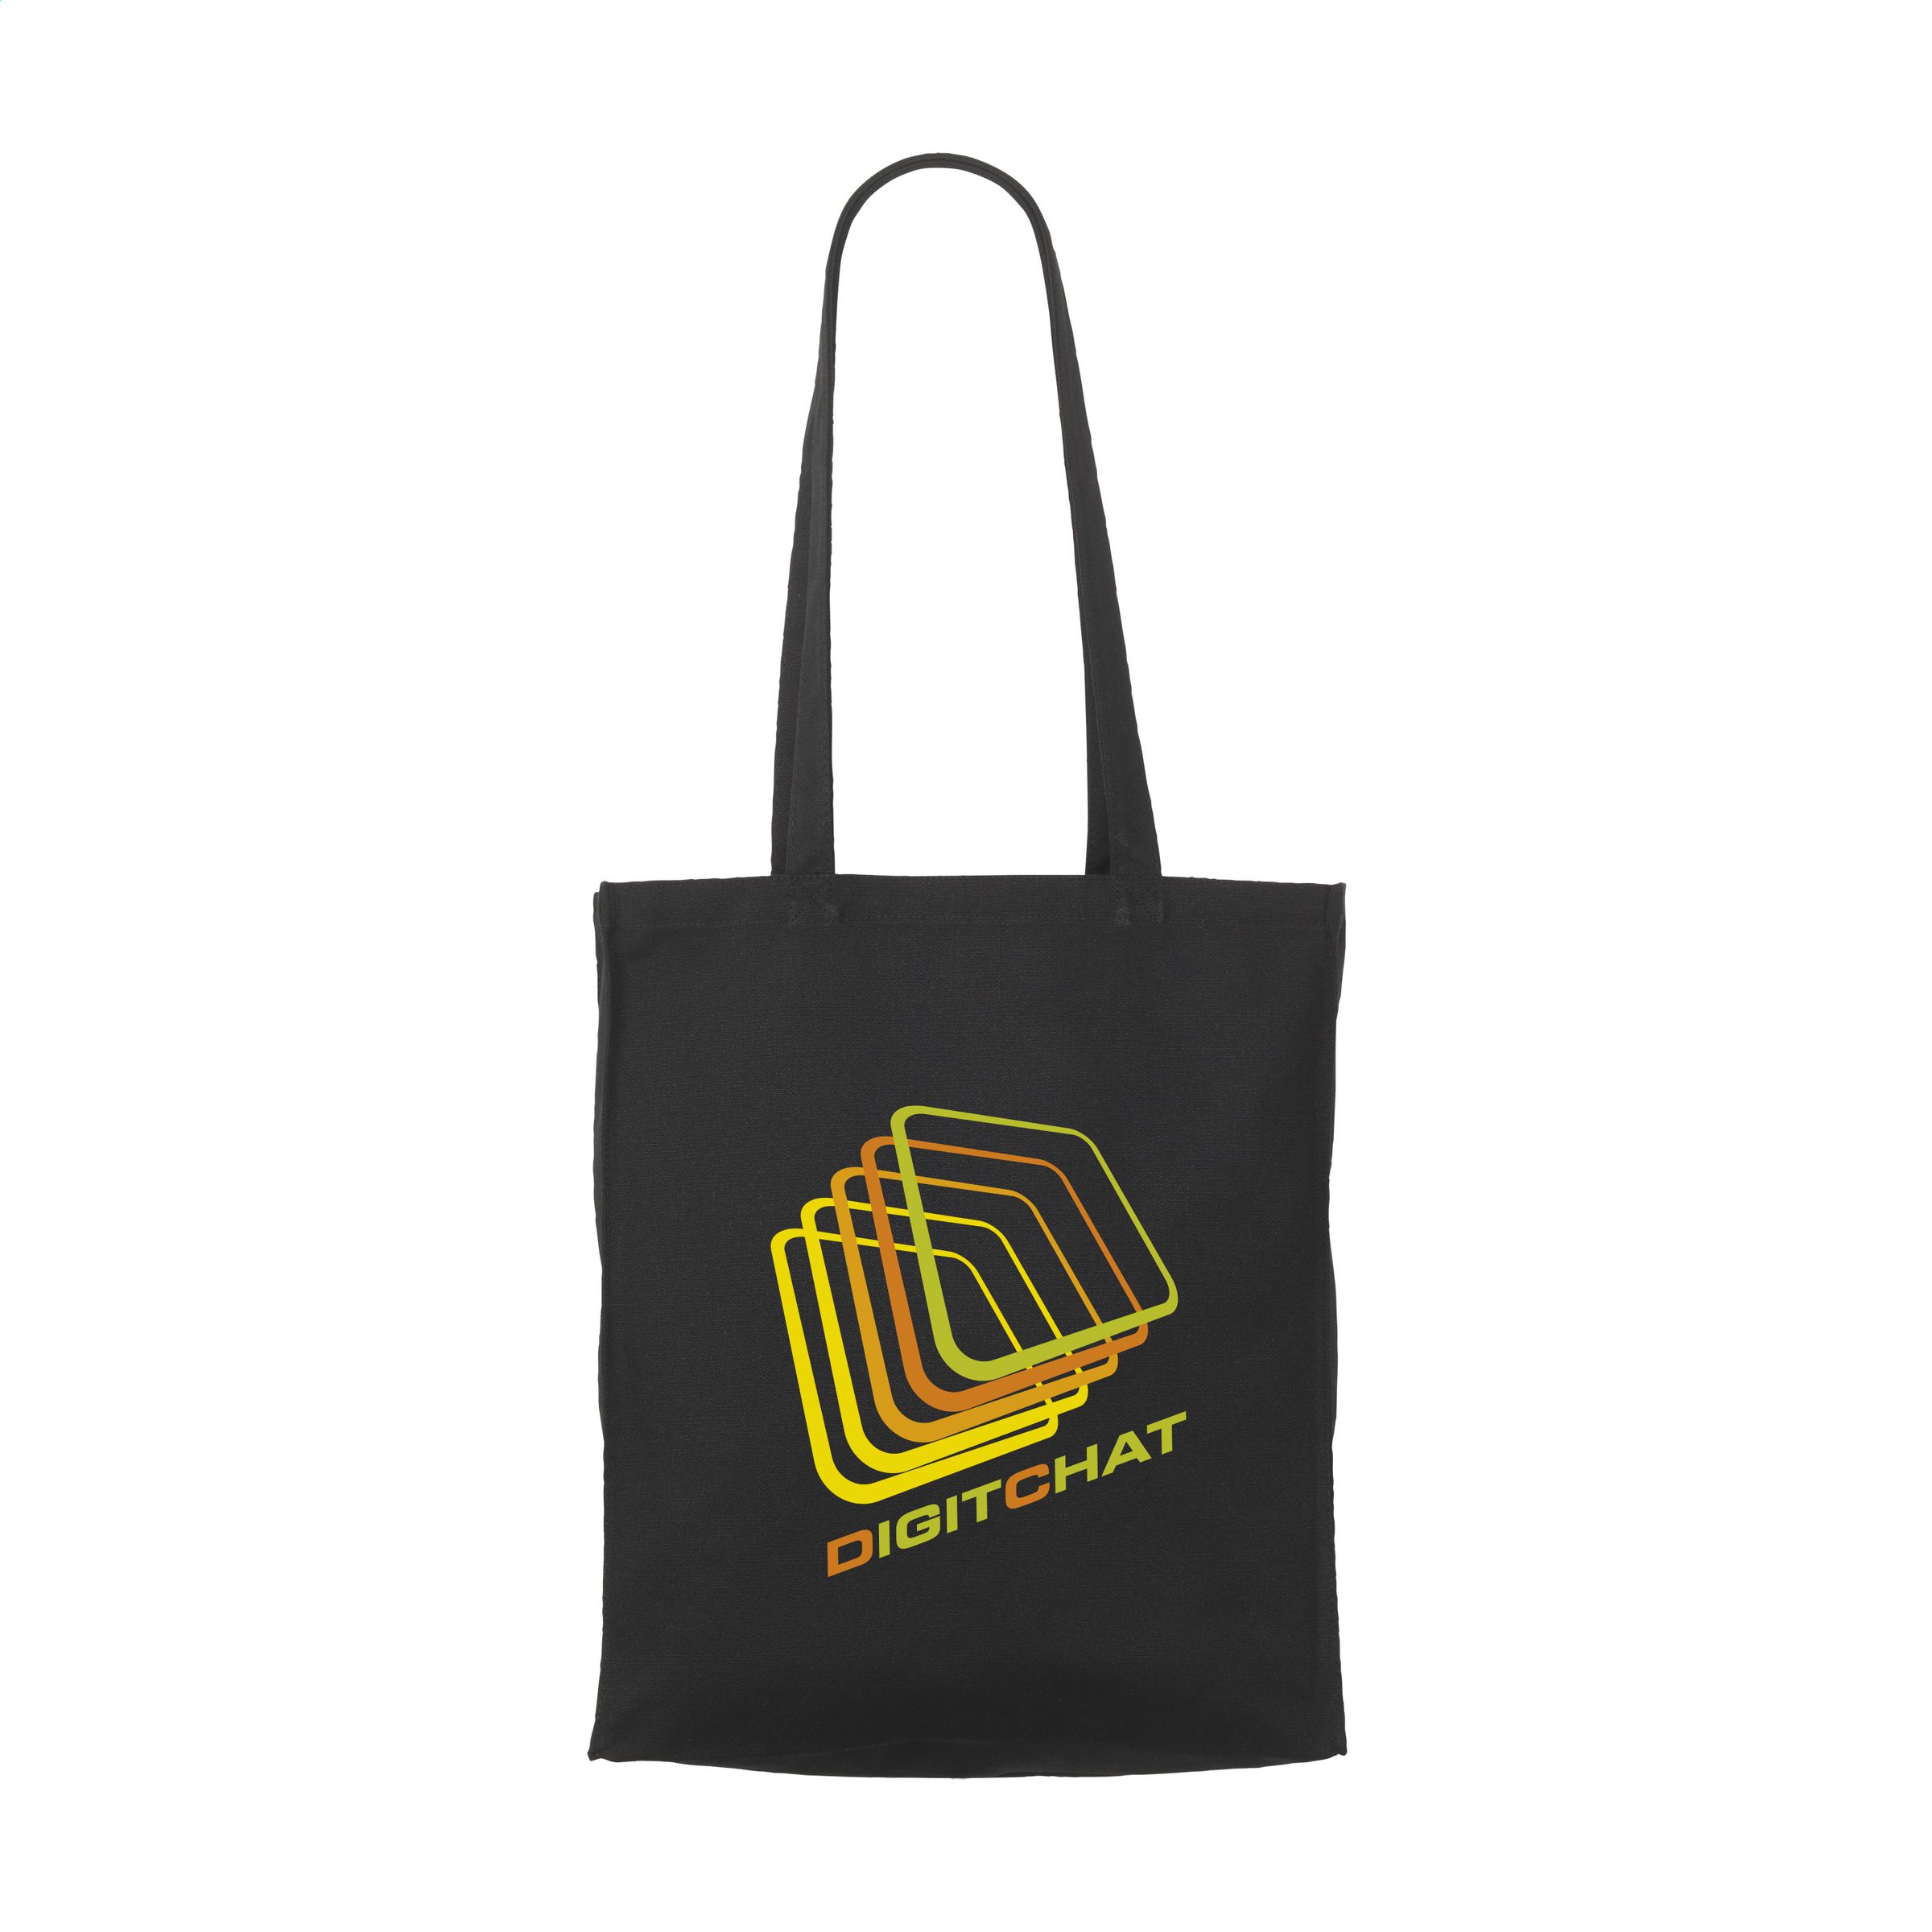 BlackCanvas (340 g/m?) shopping bag